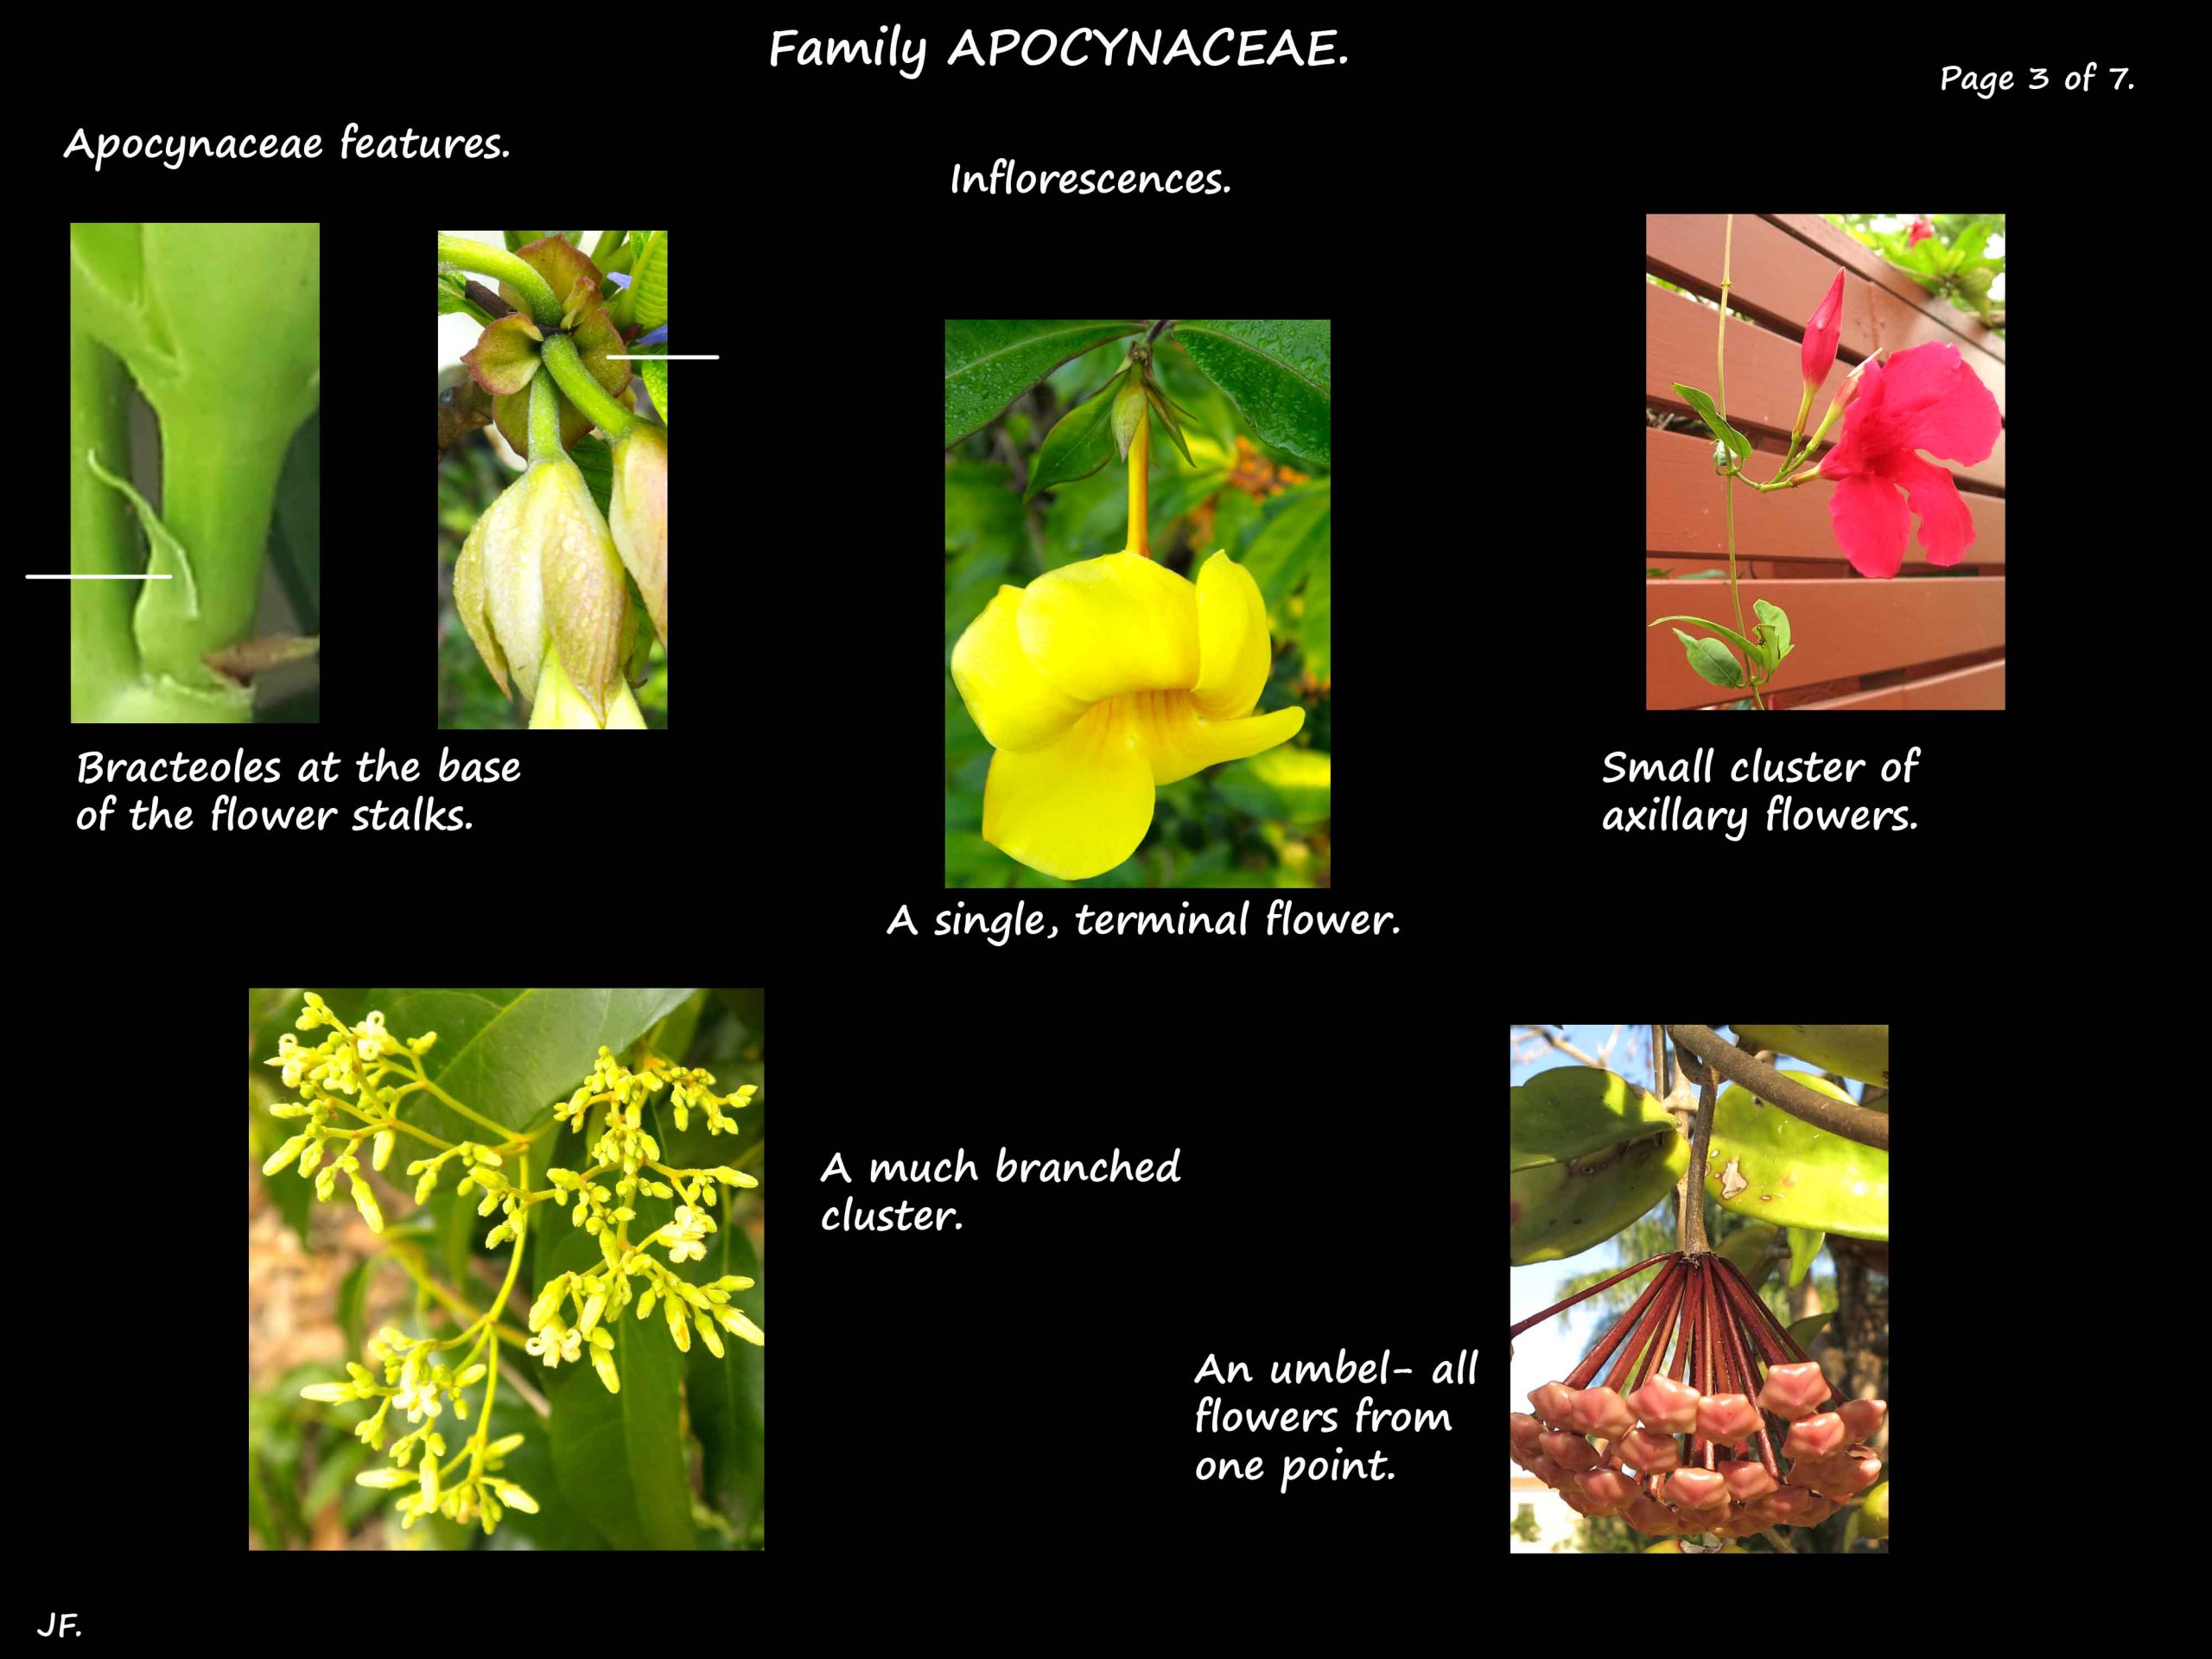 3 Apocynaceae inflorescences